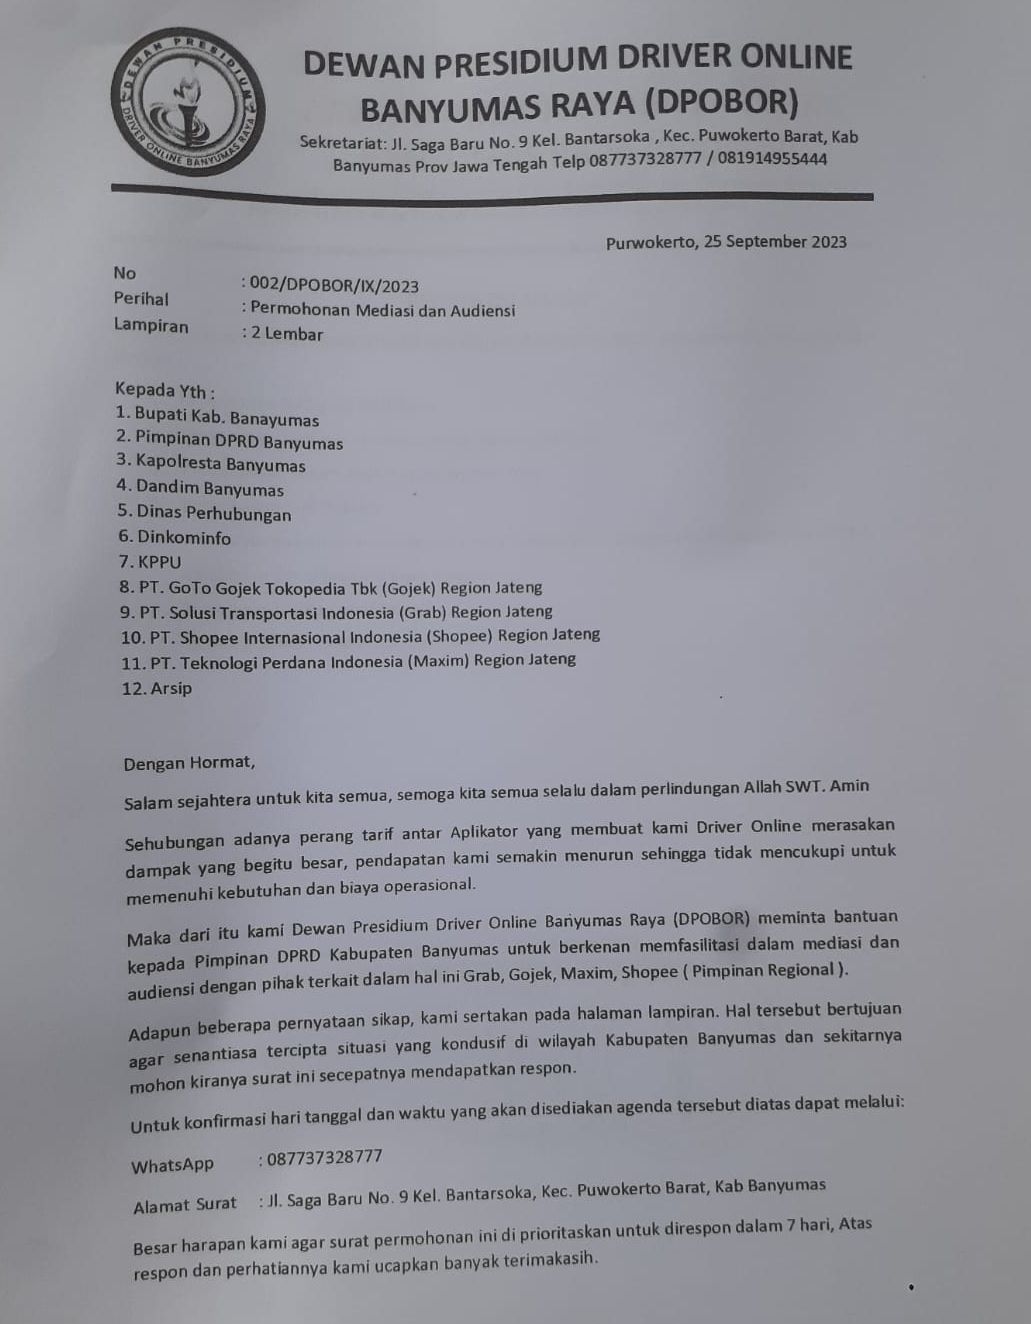 surat dari Dewan Presidium Driver Online Banyumas Raya (DPDOBOR) tertanggal 25 September 2023, perihal permohonan mediasi dan audiensi